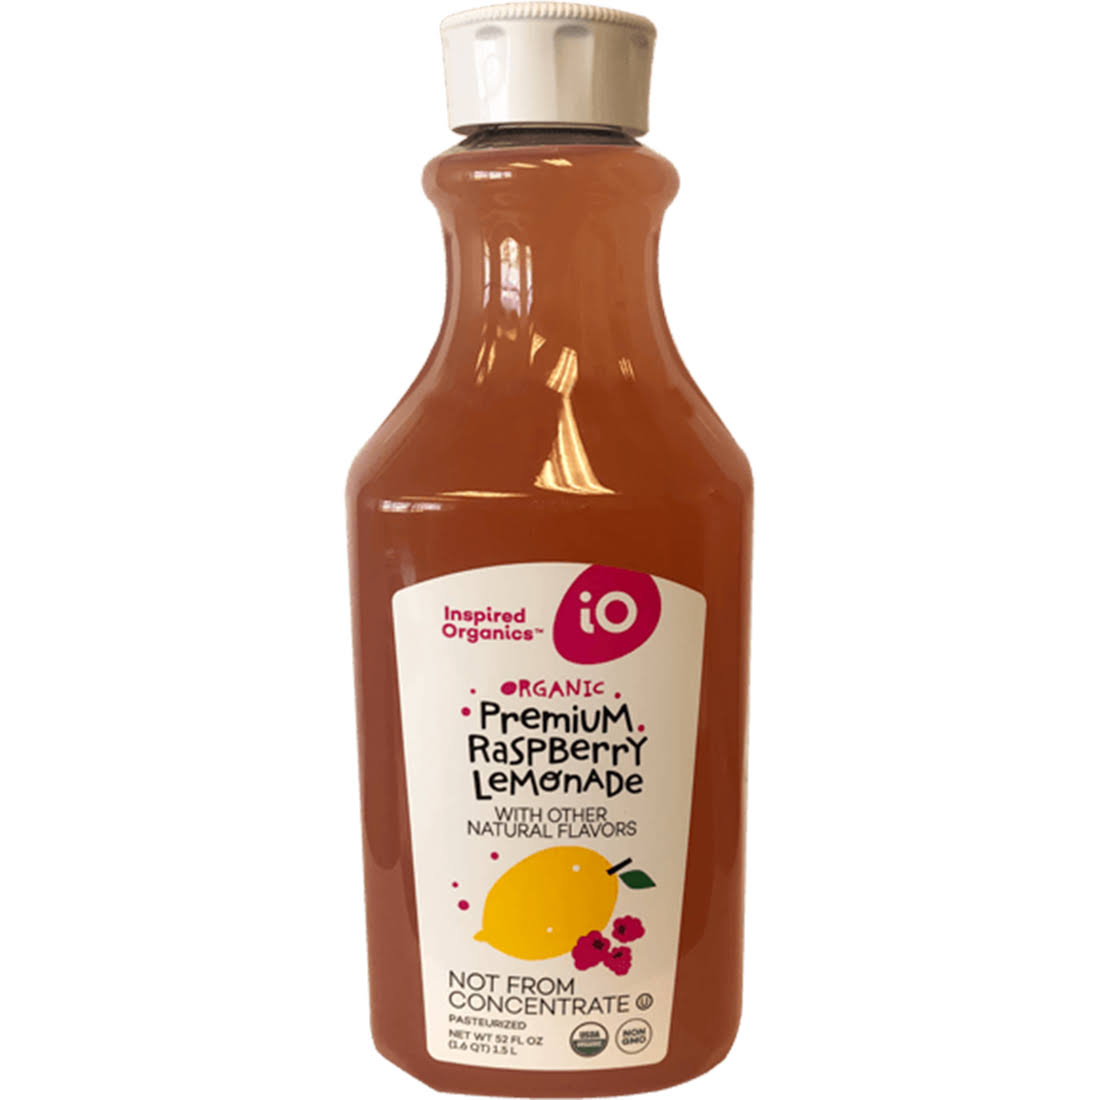 Inspired Organics Lemonade, Organic, Raspberry, Premium - 52 fl oz